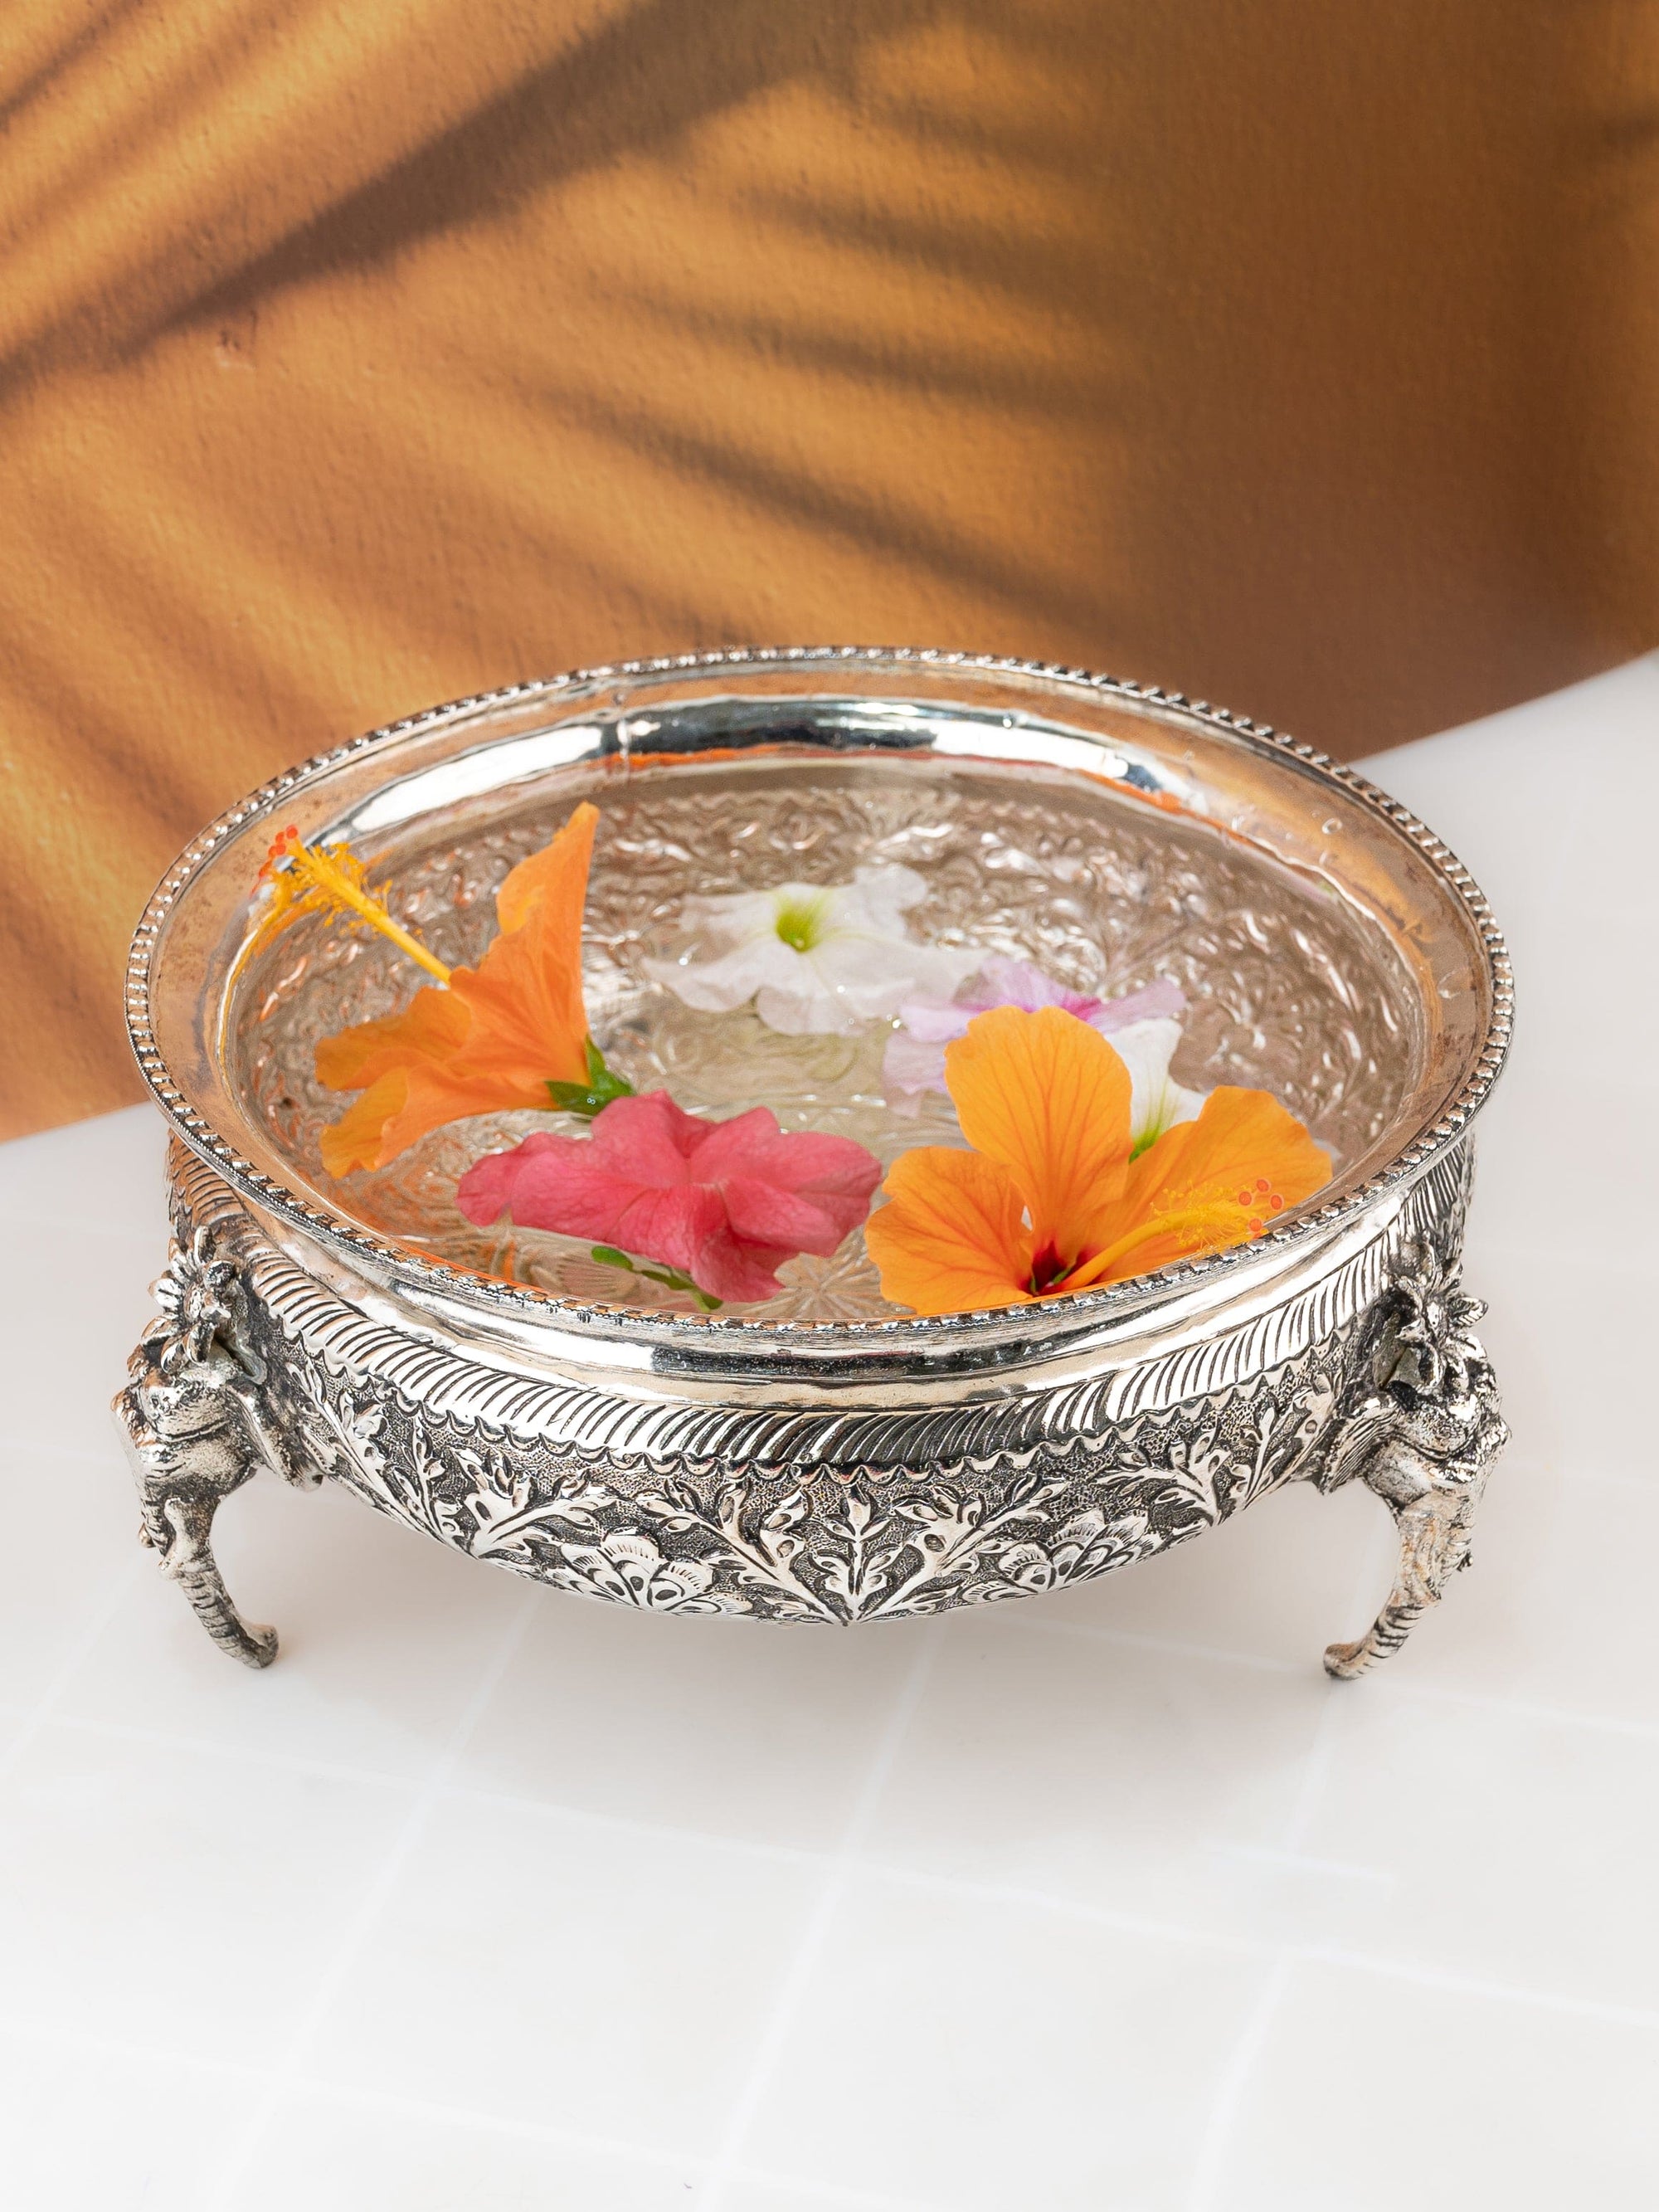 Oxidized Silver Urli / Bowl for Home Decor and Puja Rituals - 10 inches diameter